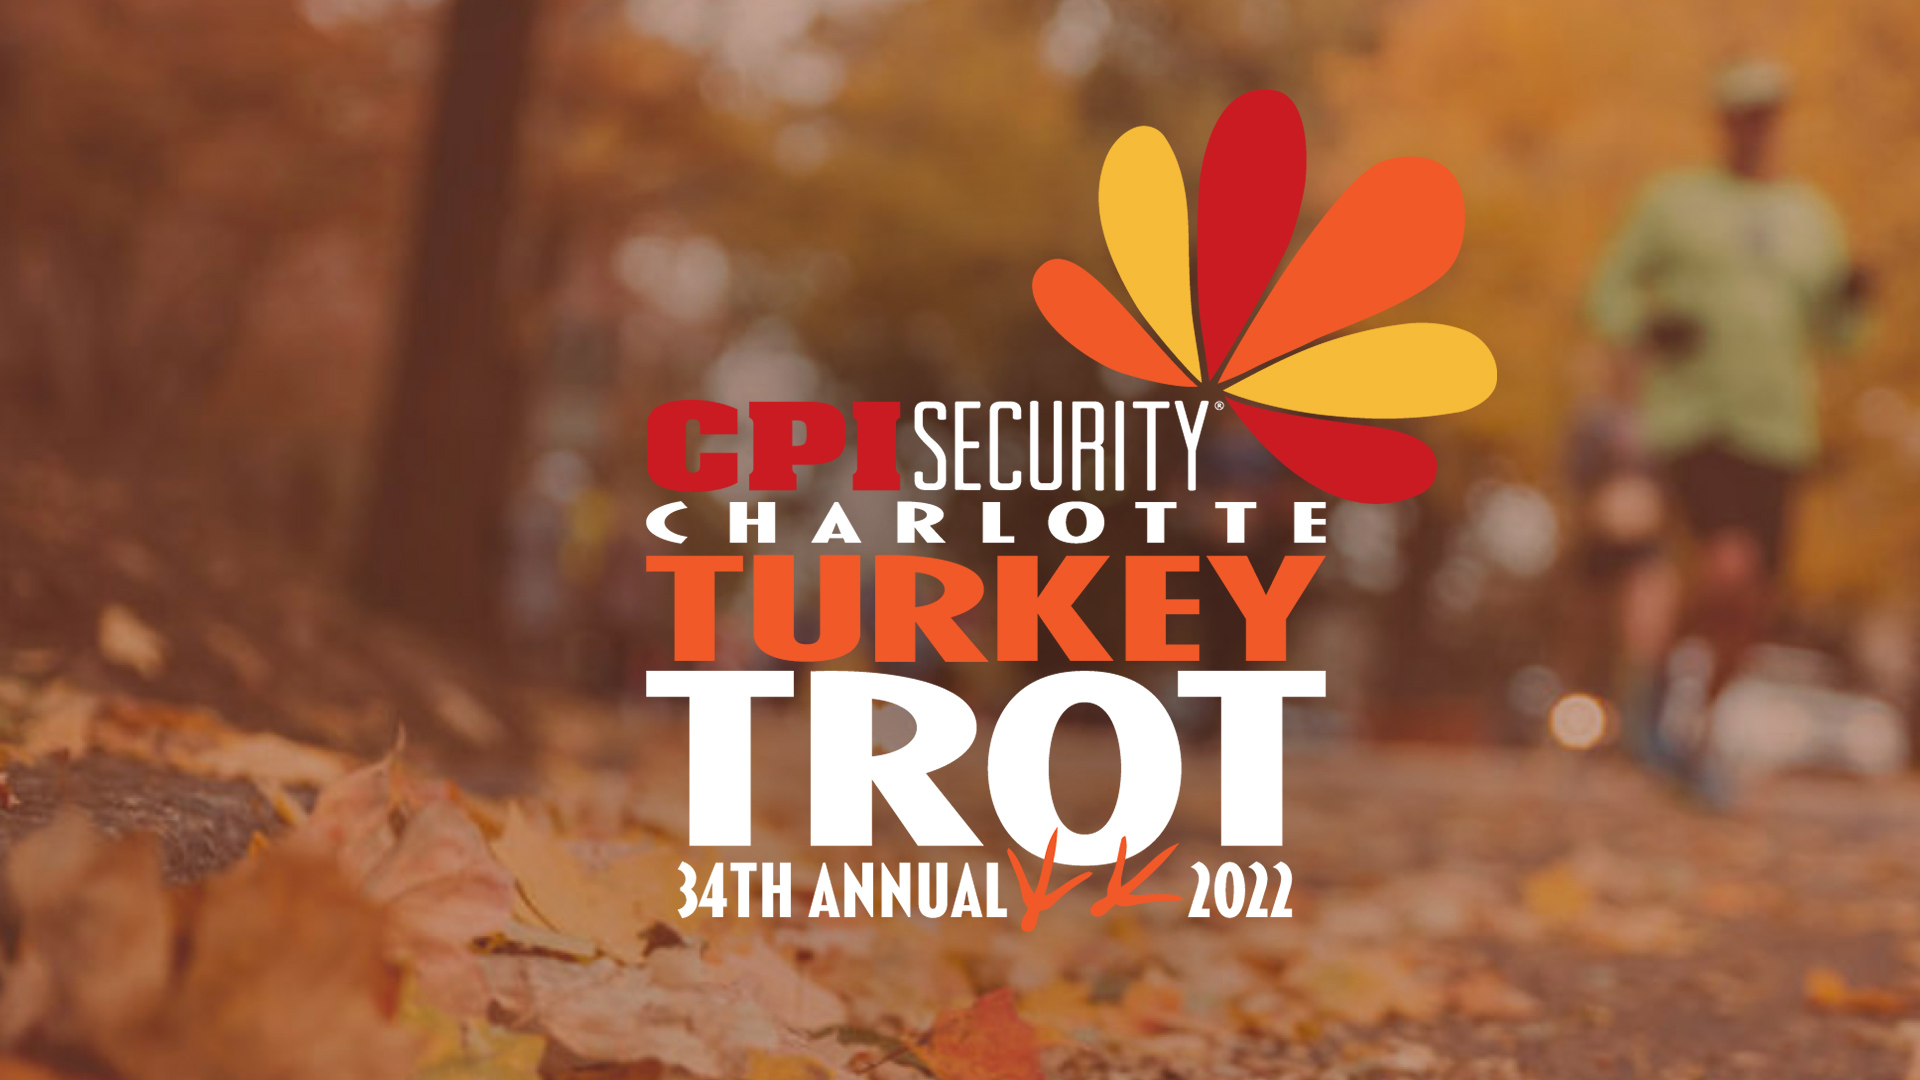 CPI Security Charlotte Turkey Trot